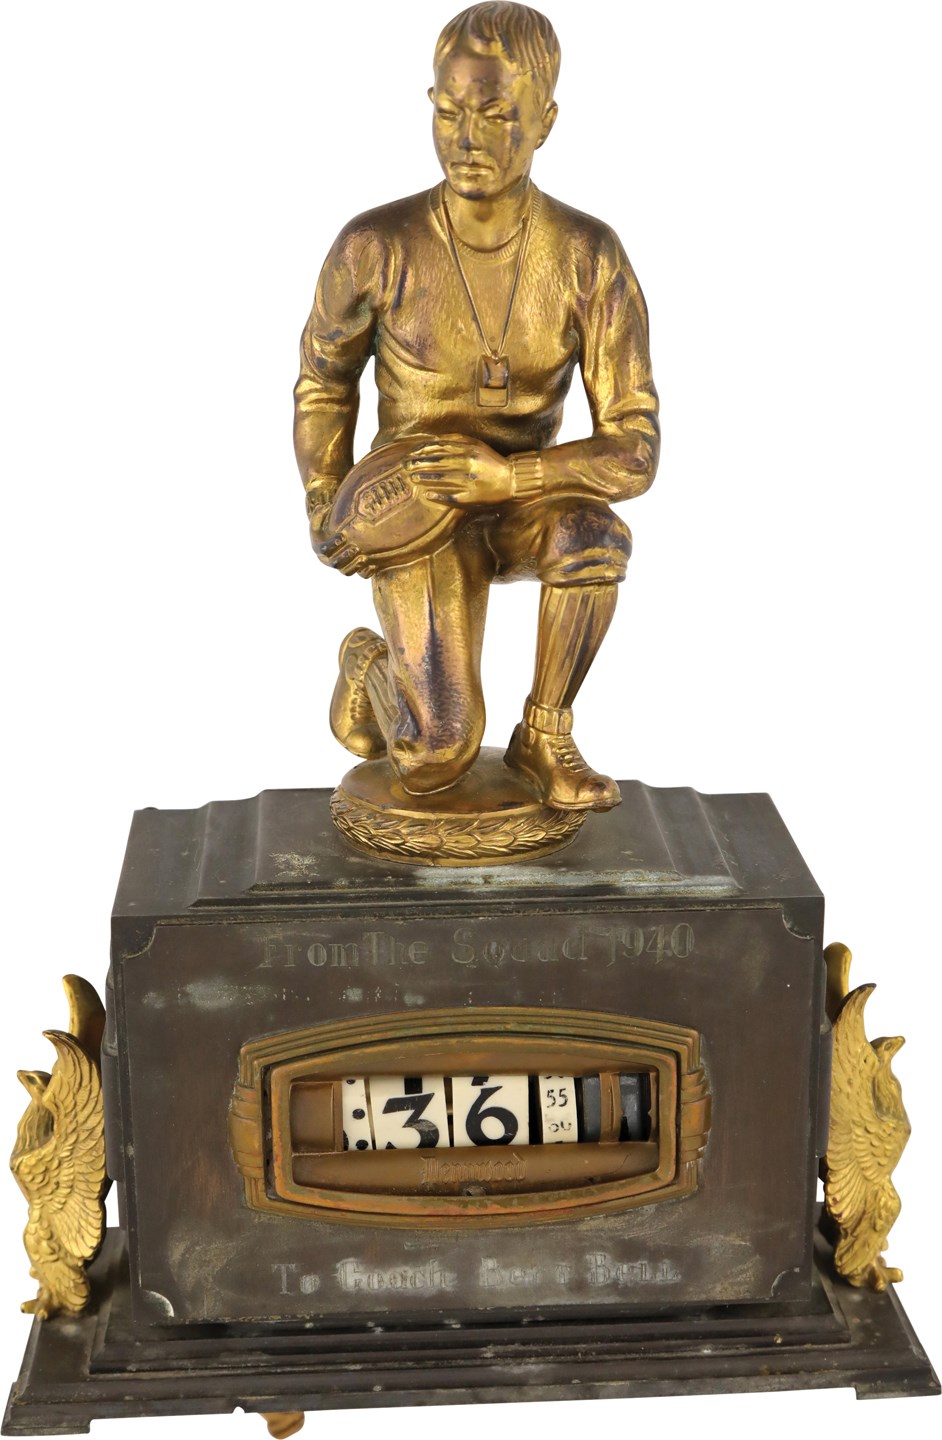 - 1940 Presentational Clock Award Presented to Bert Bell